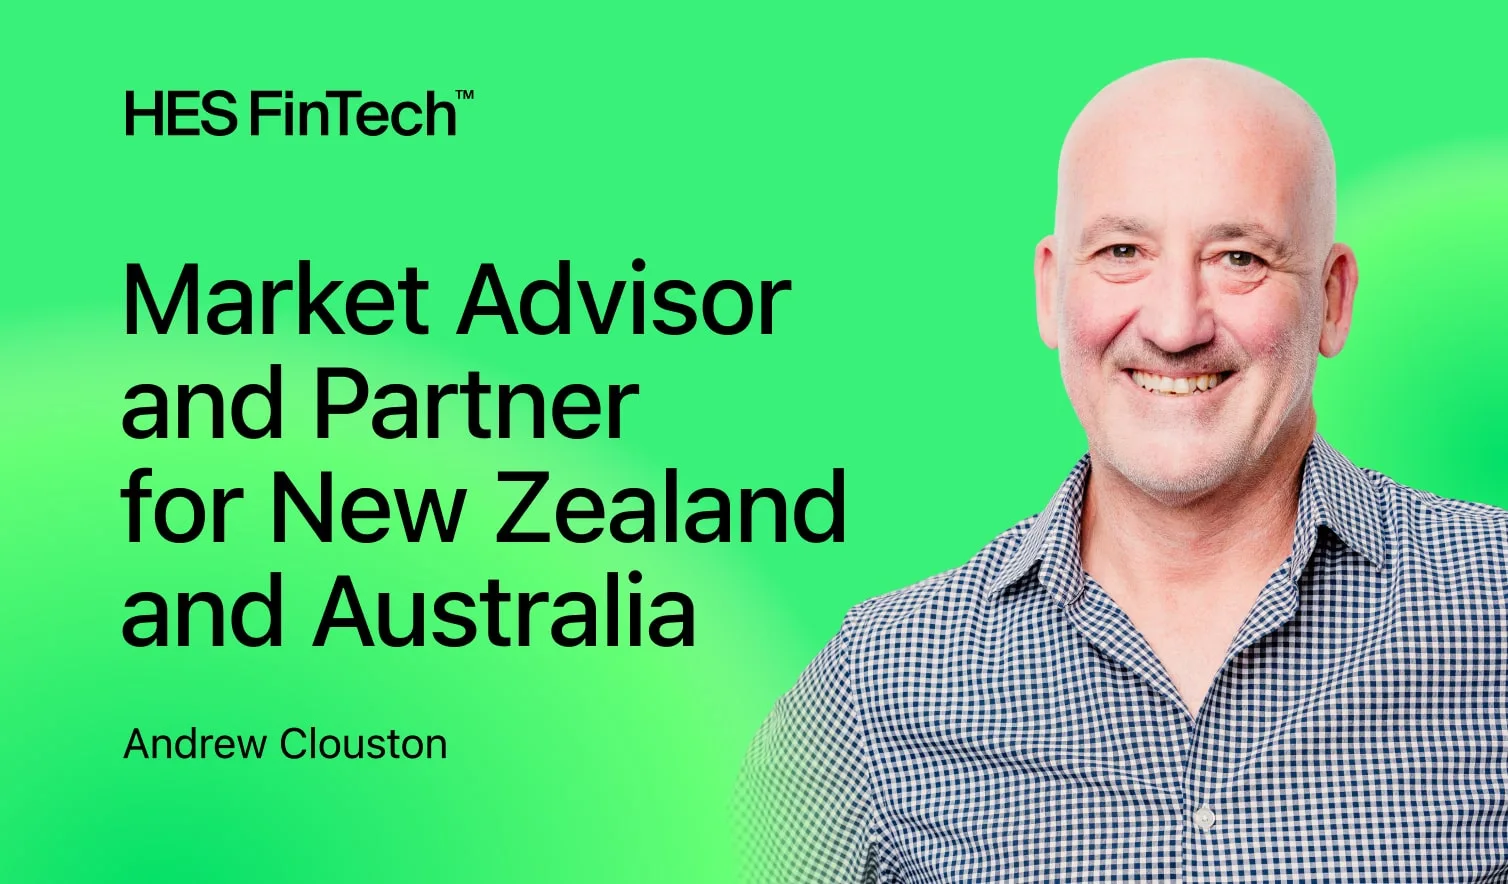 Andrew Clouston Joins HES Fintech as New Market Advisor/Partner for the ANZ Region